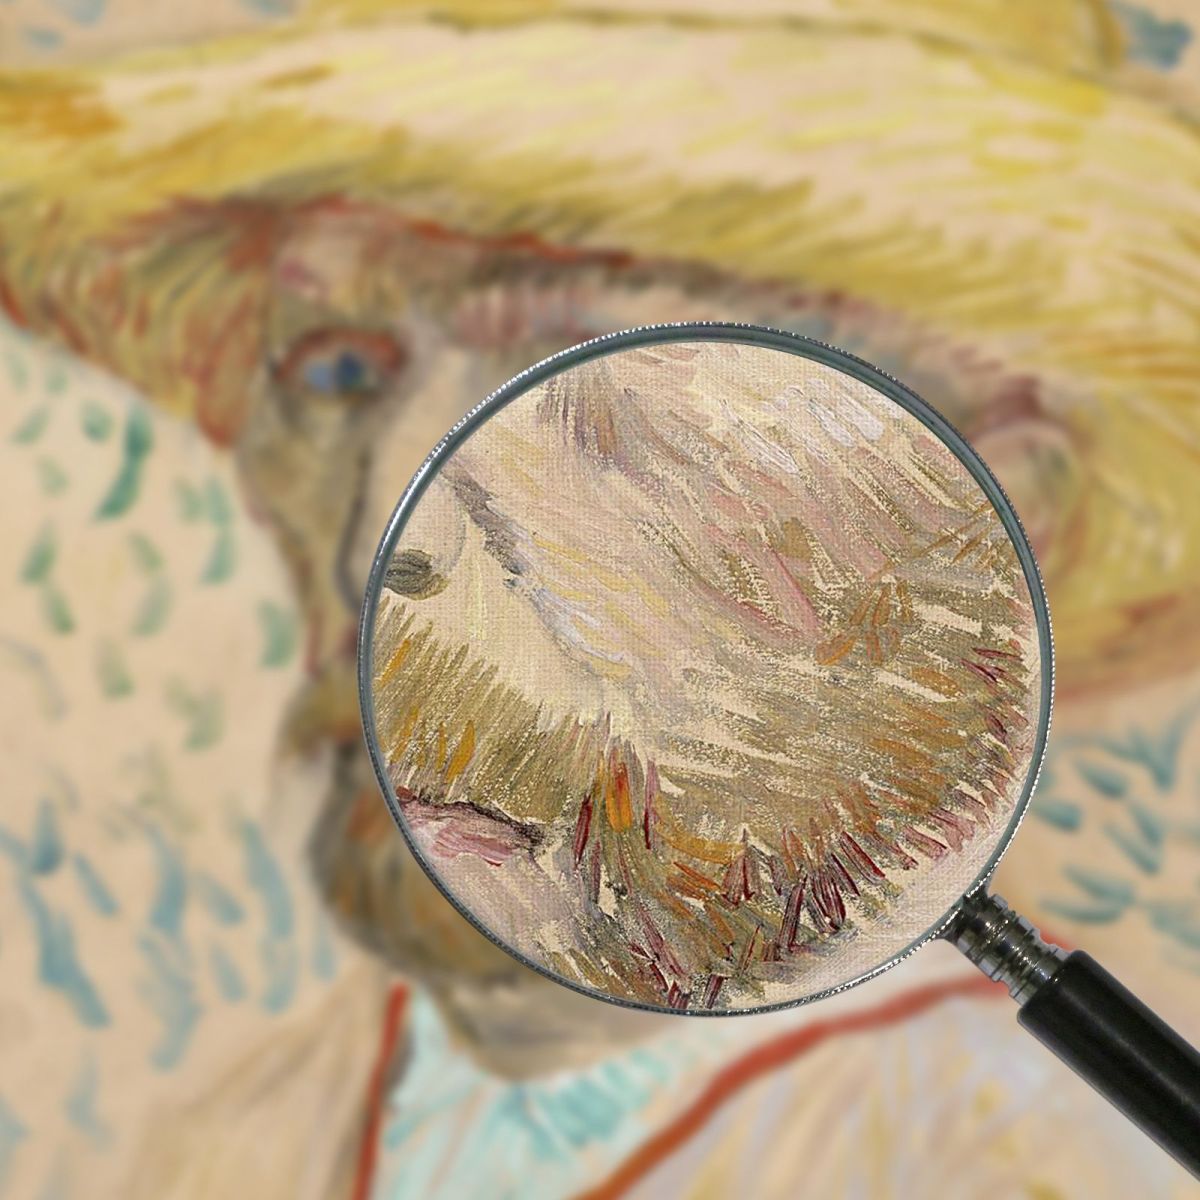 Self-Portrait With Straw Hat Van Gogh Vincent canvas print vvg90